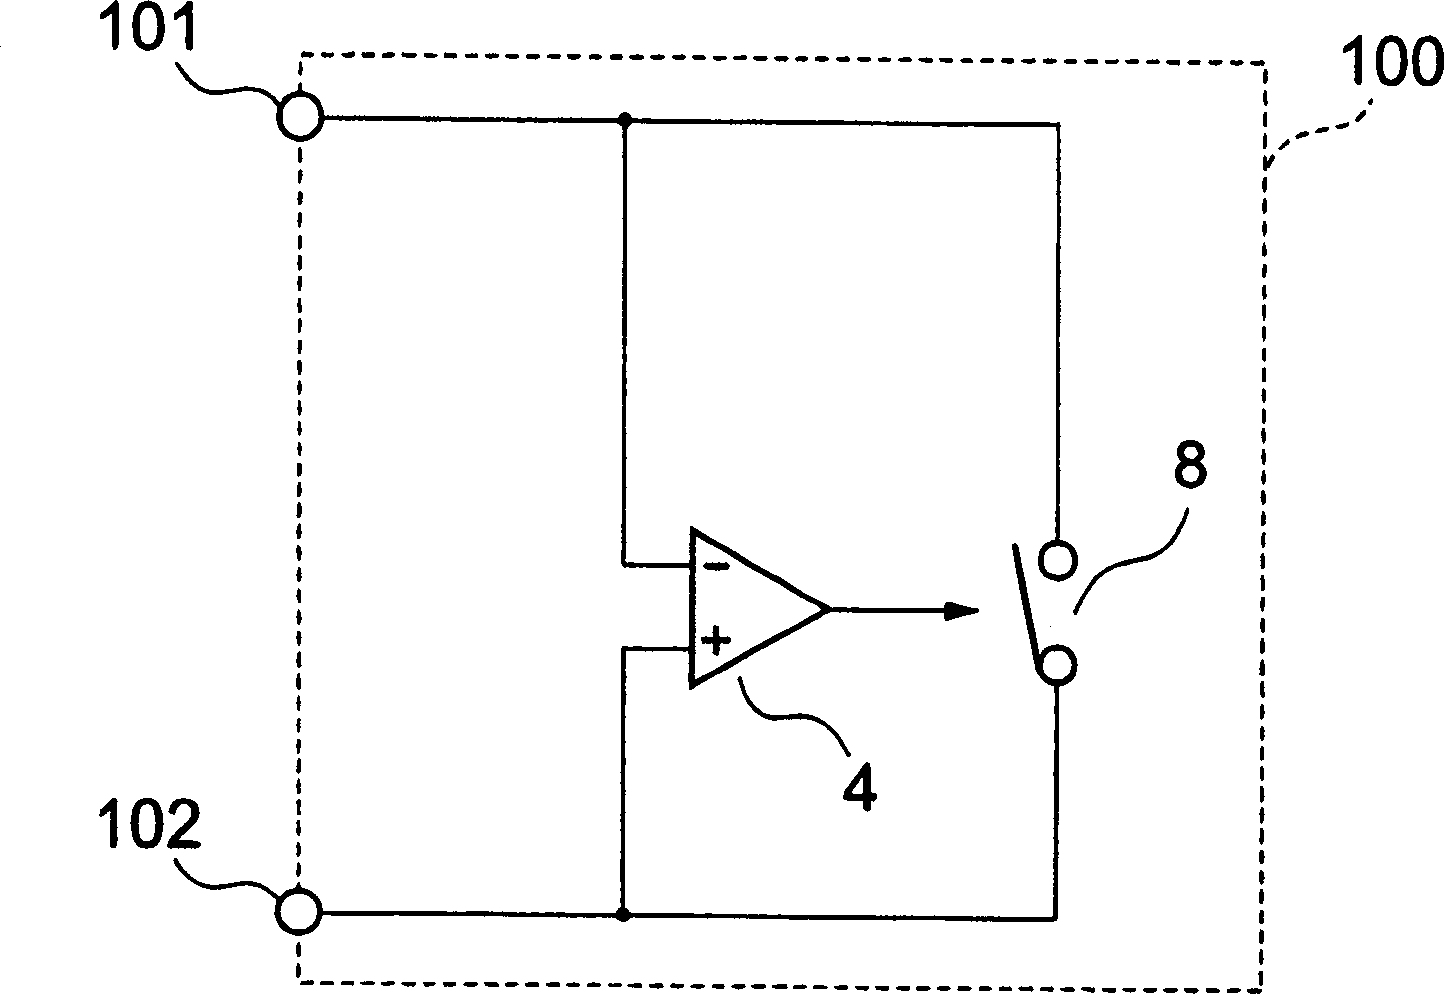 Diode circuit